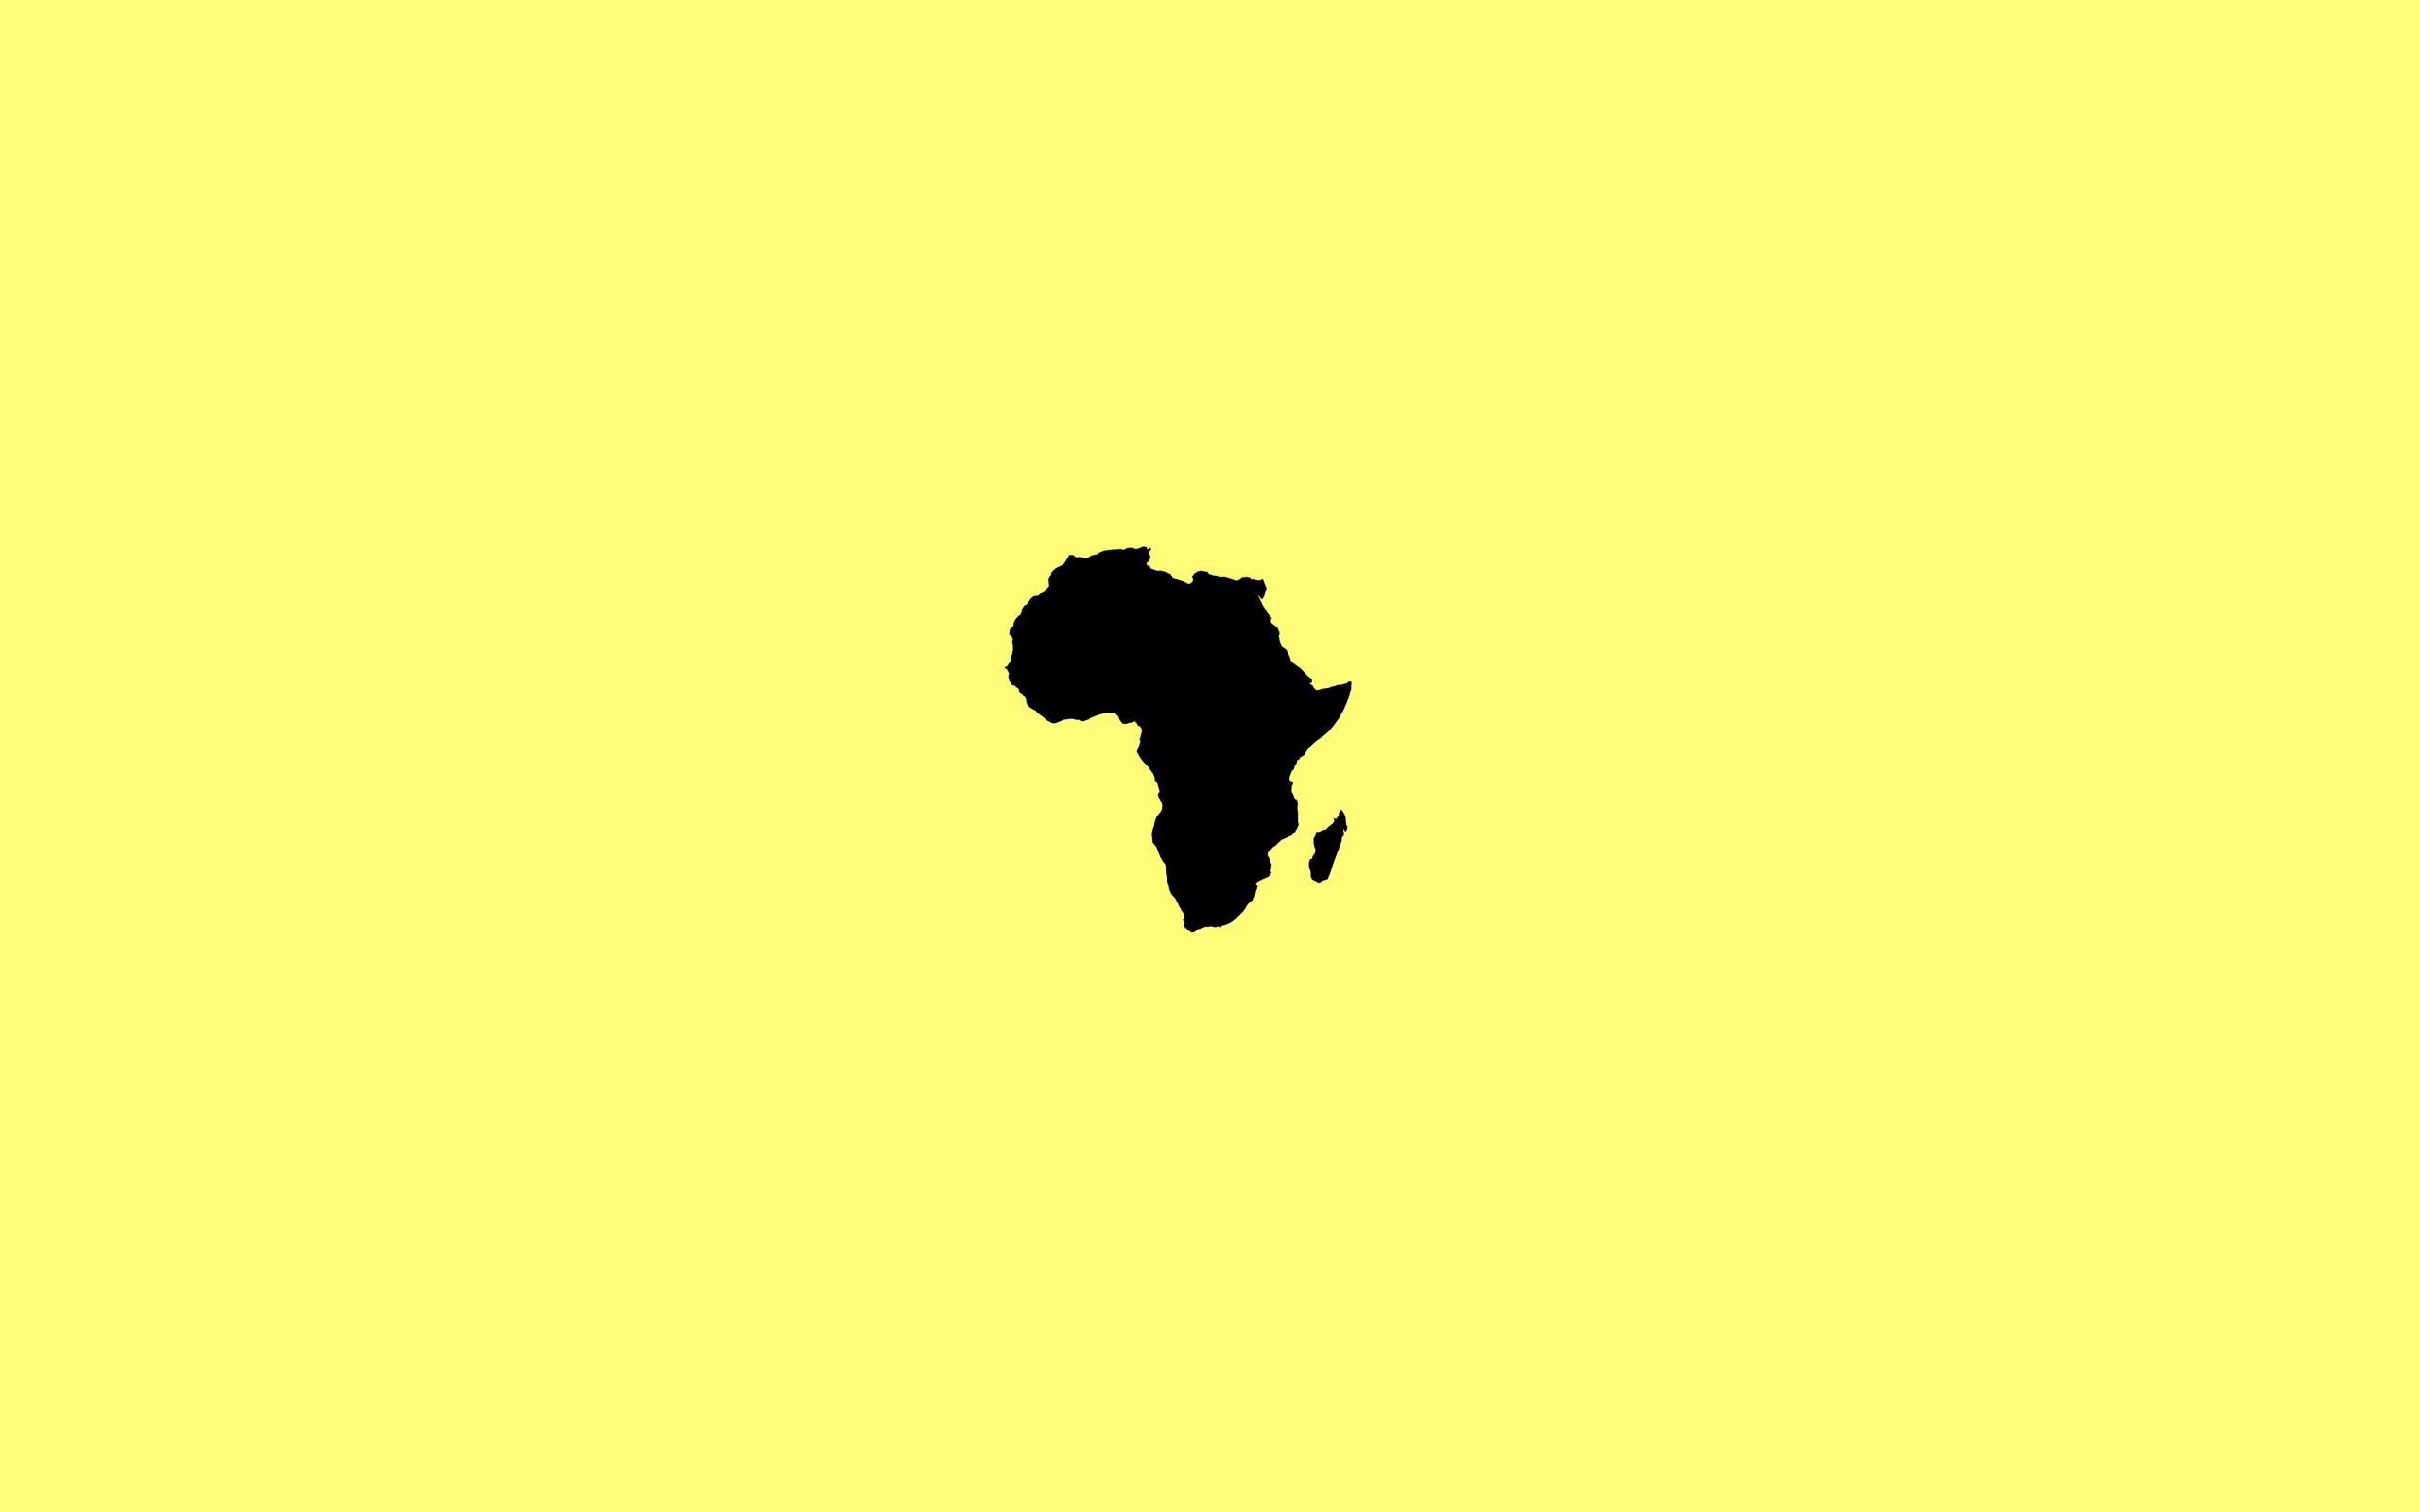 Simple Desktop Wallpaper: African Continent. Think Beyond Borders